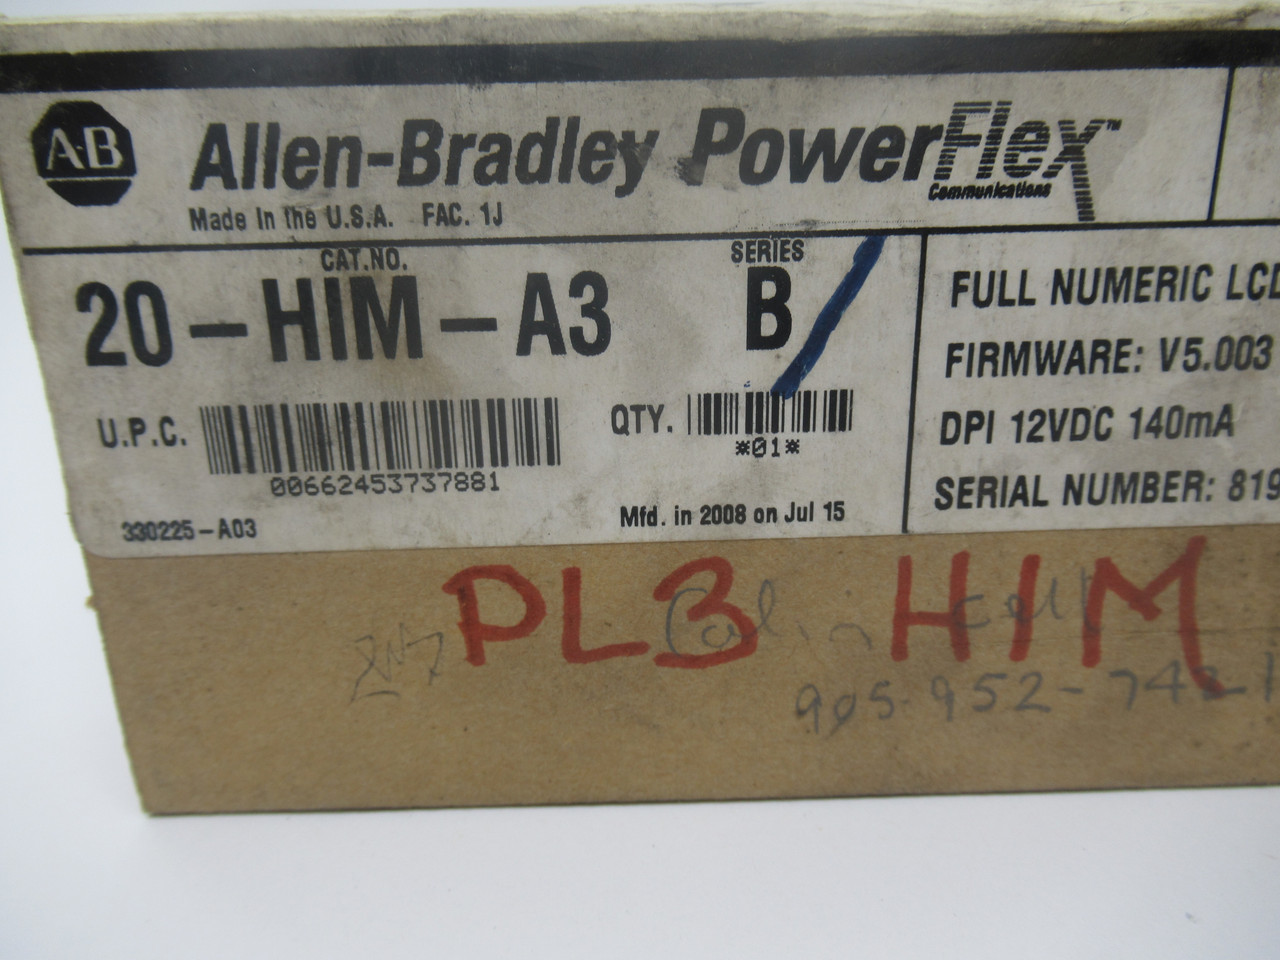 Allen-Bradley 20-HIM-A3 Full Numeric LCD Keypad Series B Firmware V5.003 NEW